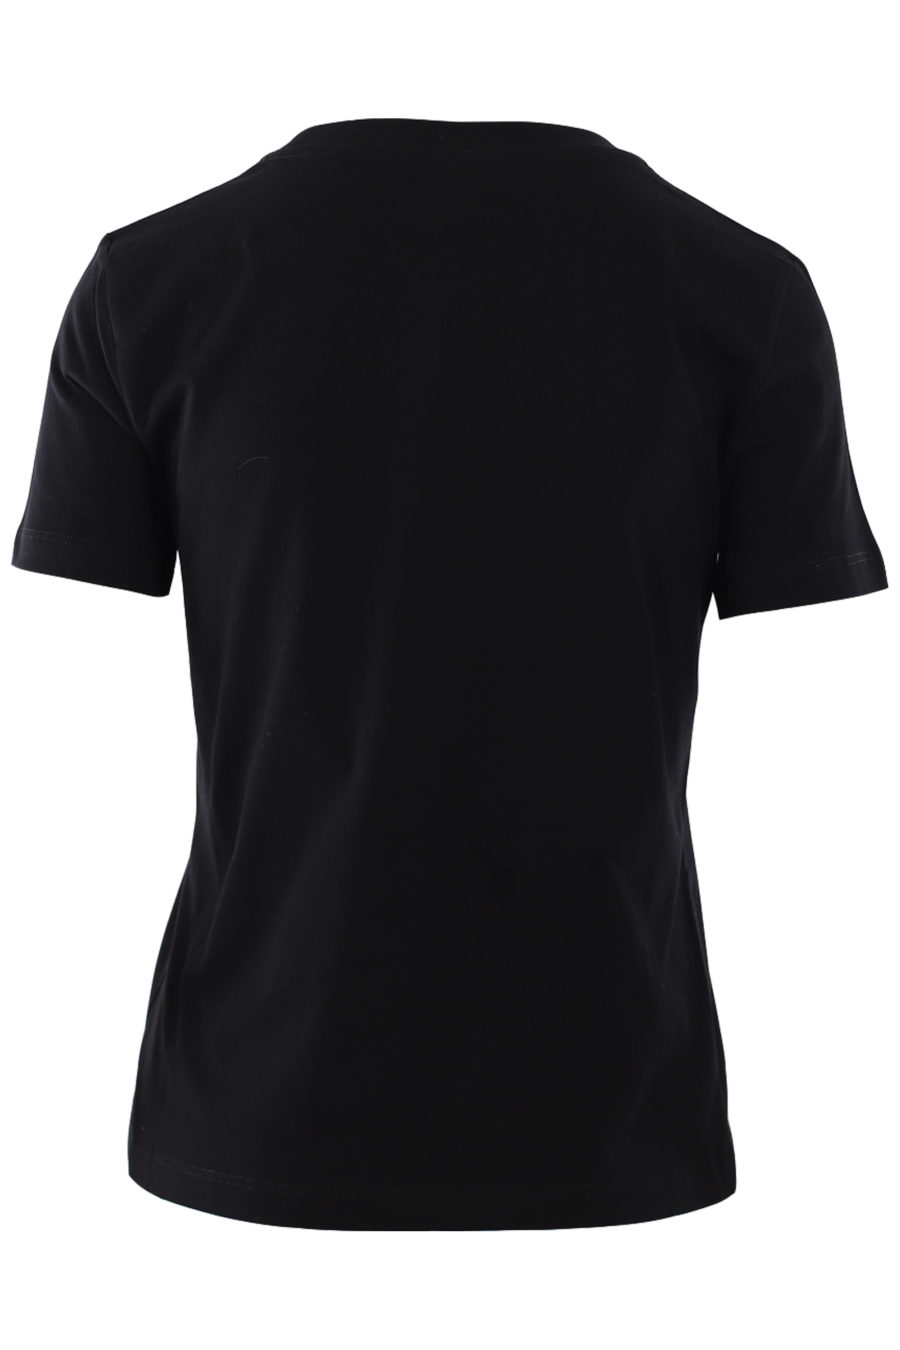 Camiseta negra con logo tropical - IMG 0820